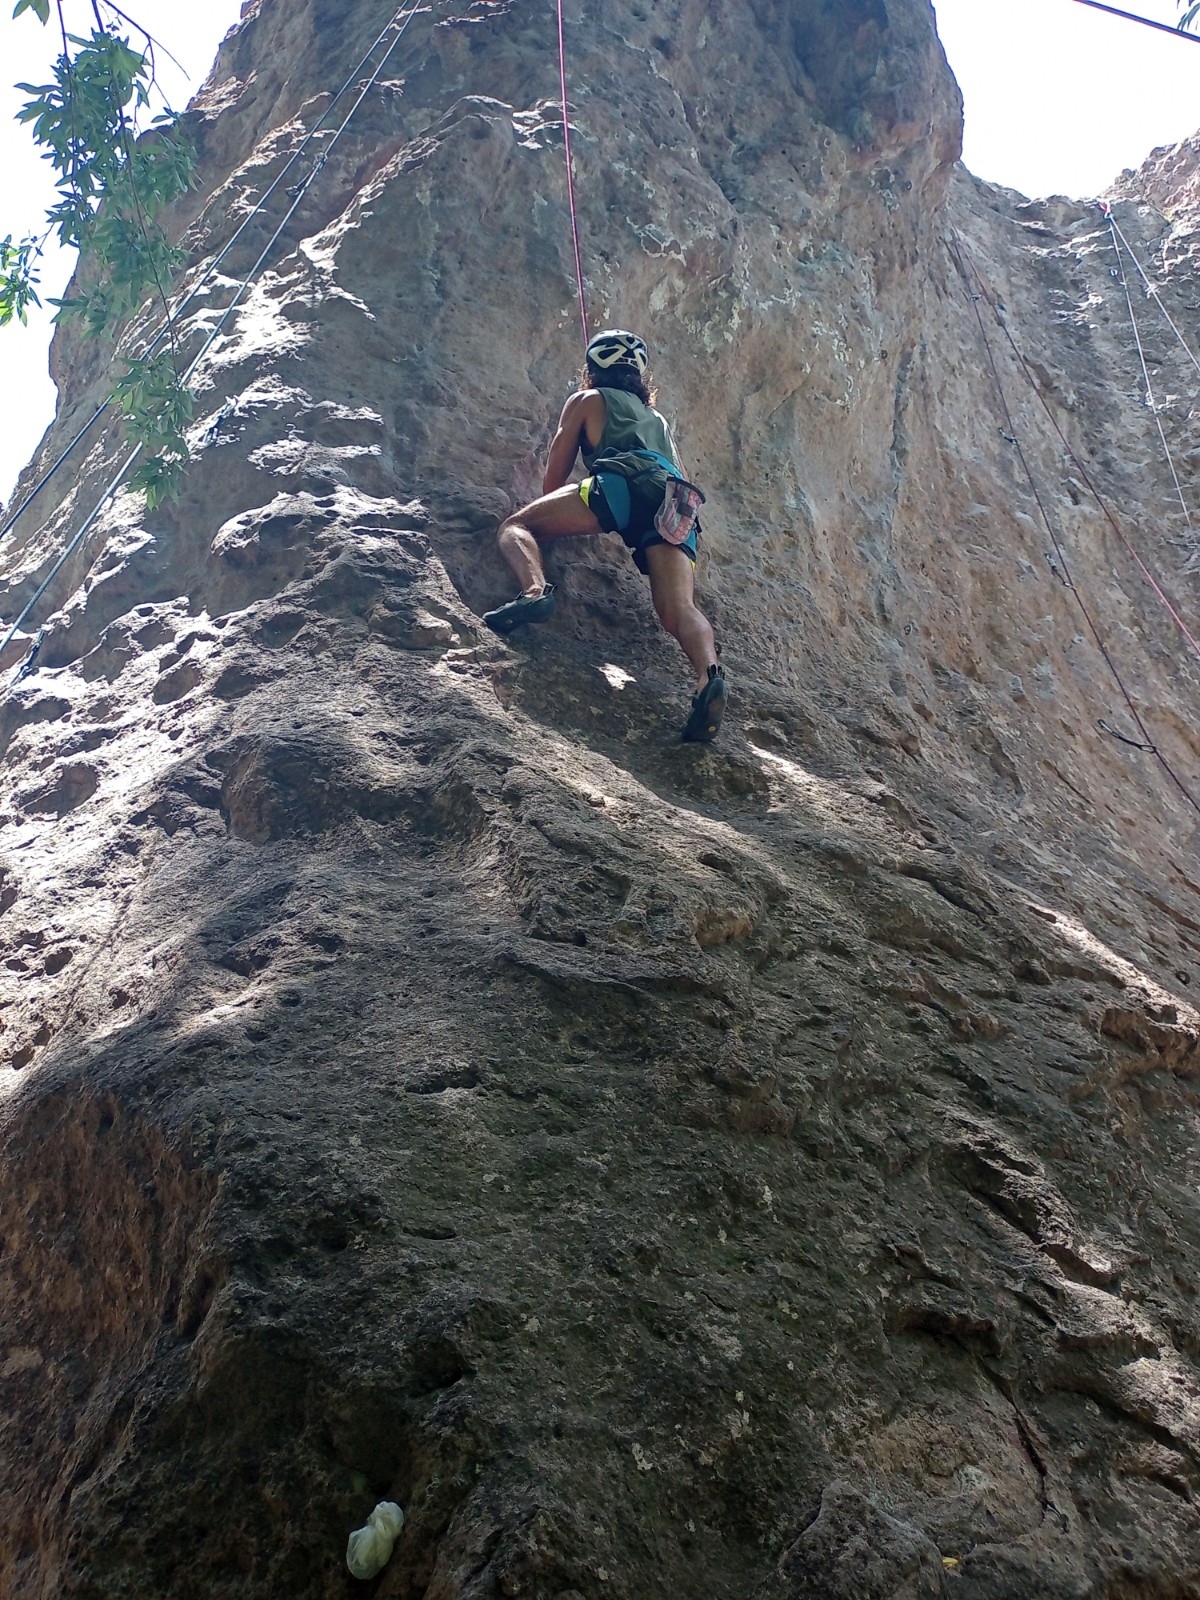 Sport Climbing hero image. Me climbing up a rock route called "La Ola", at Cacheuta Sur, Mendoza.